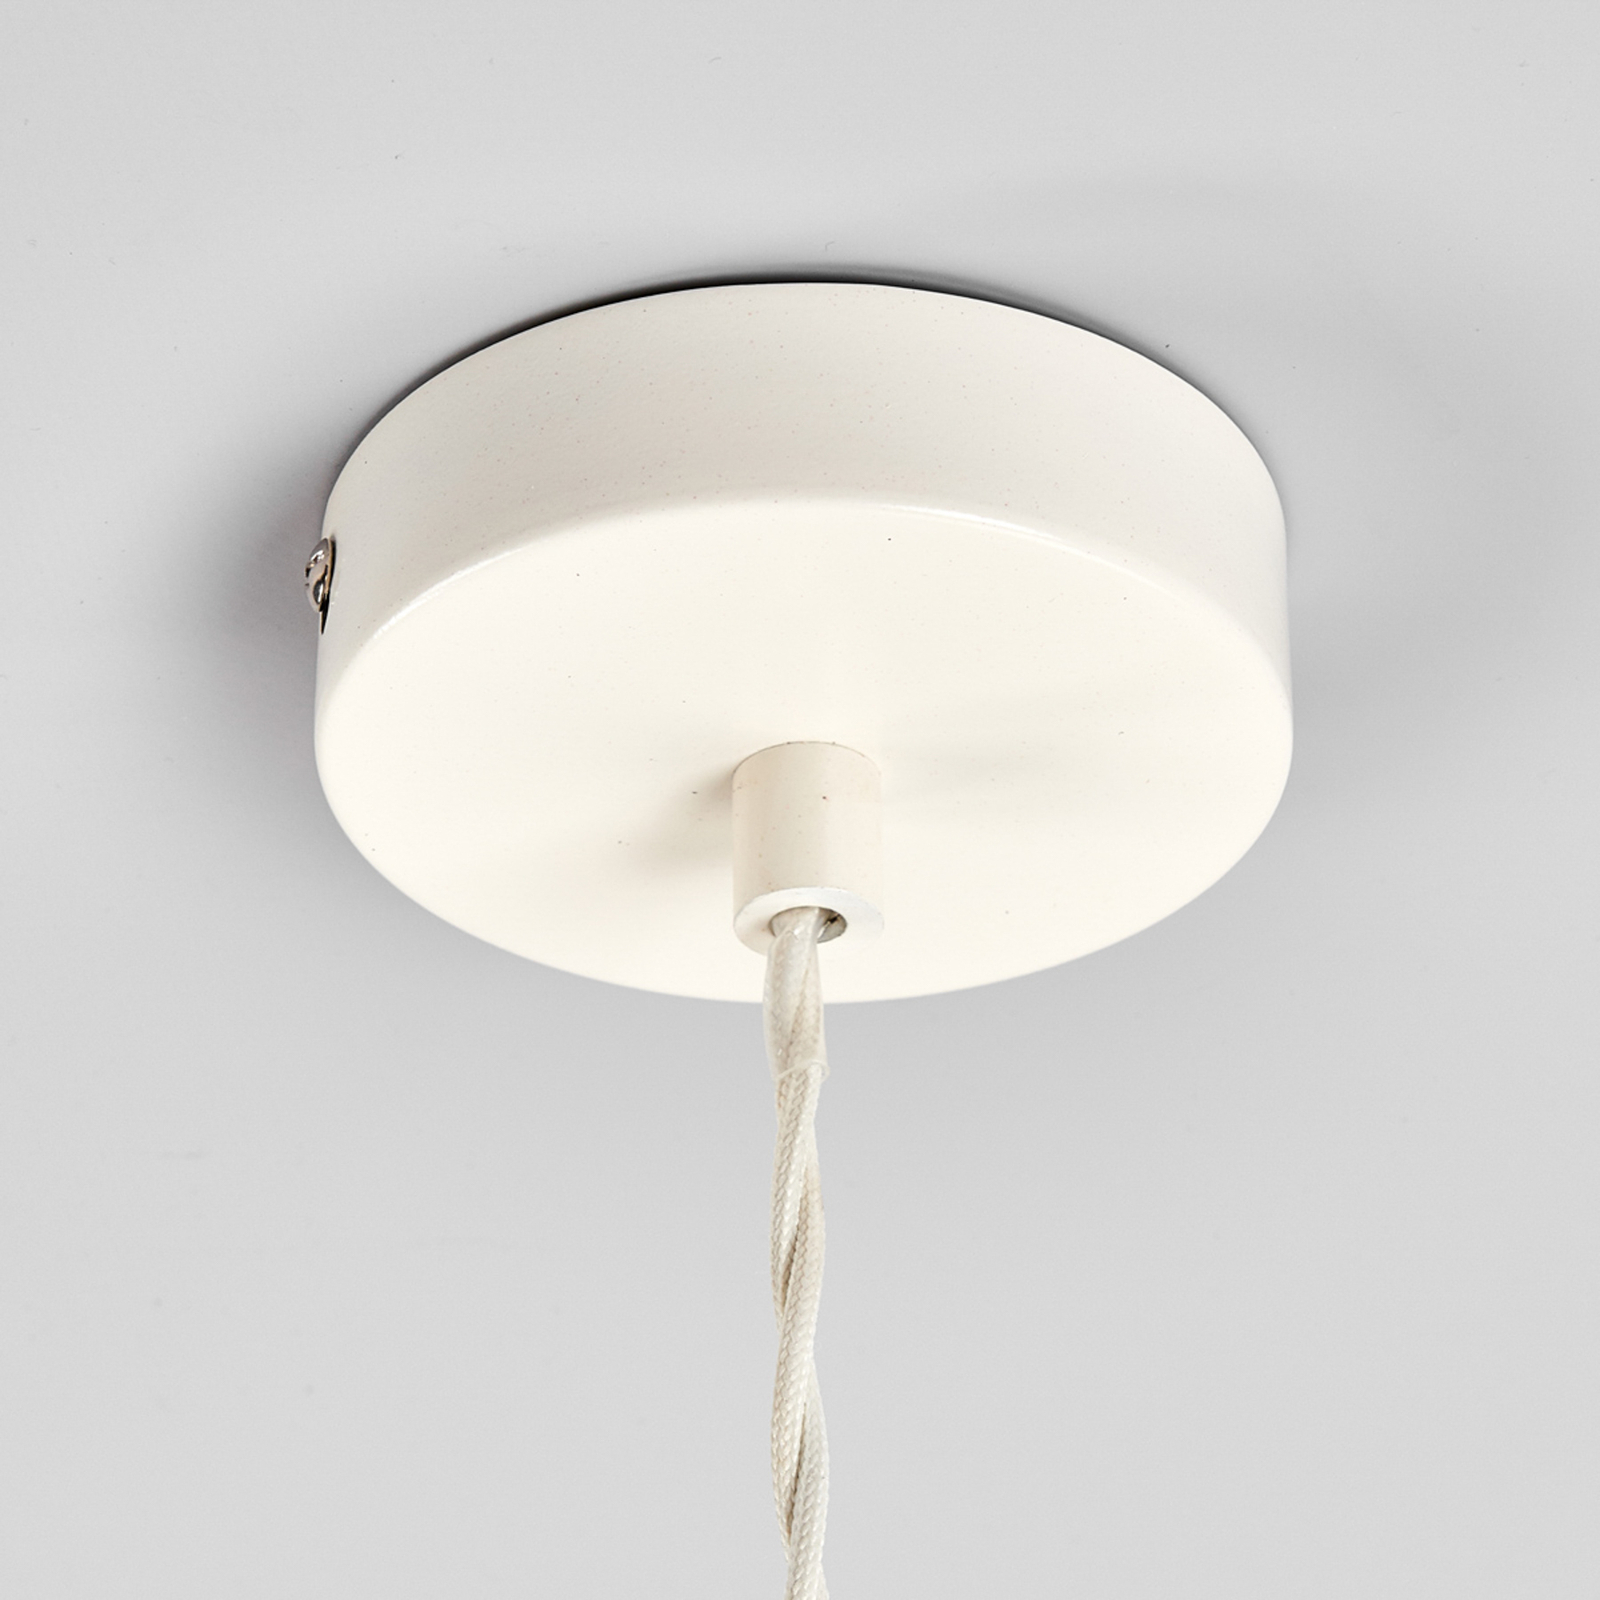 Isla pendant light with metal shade, white